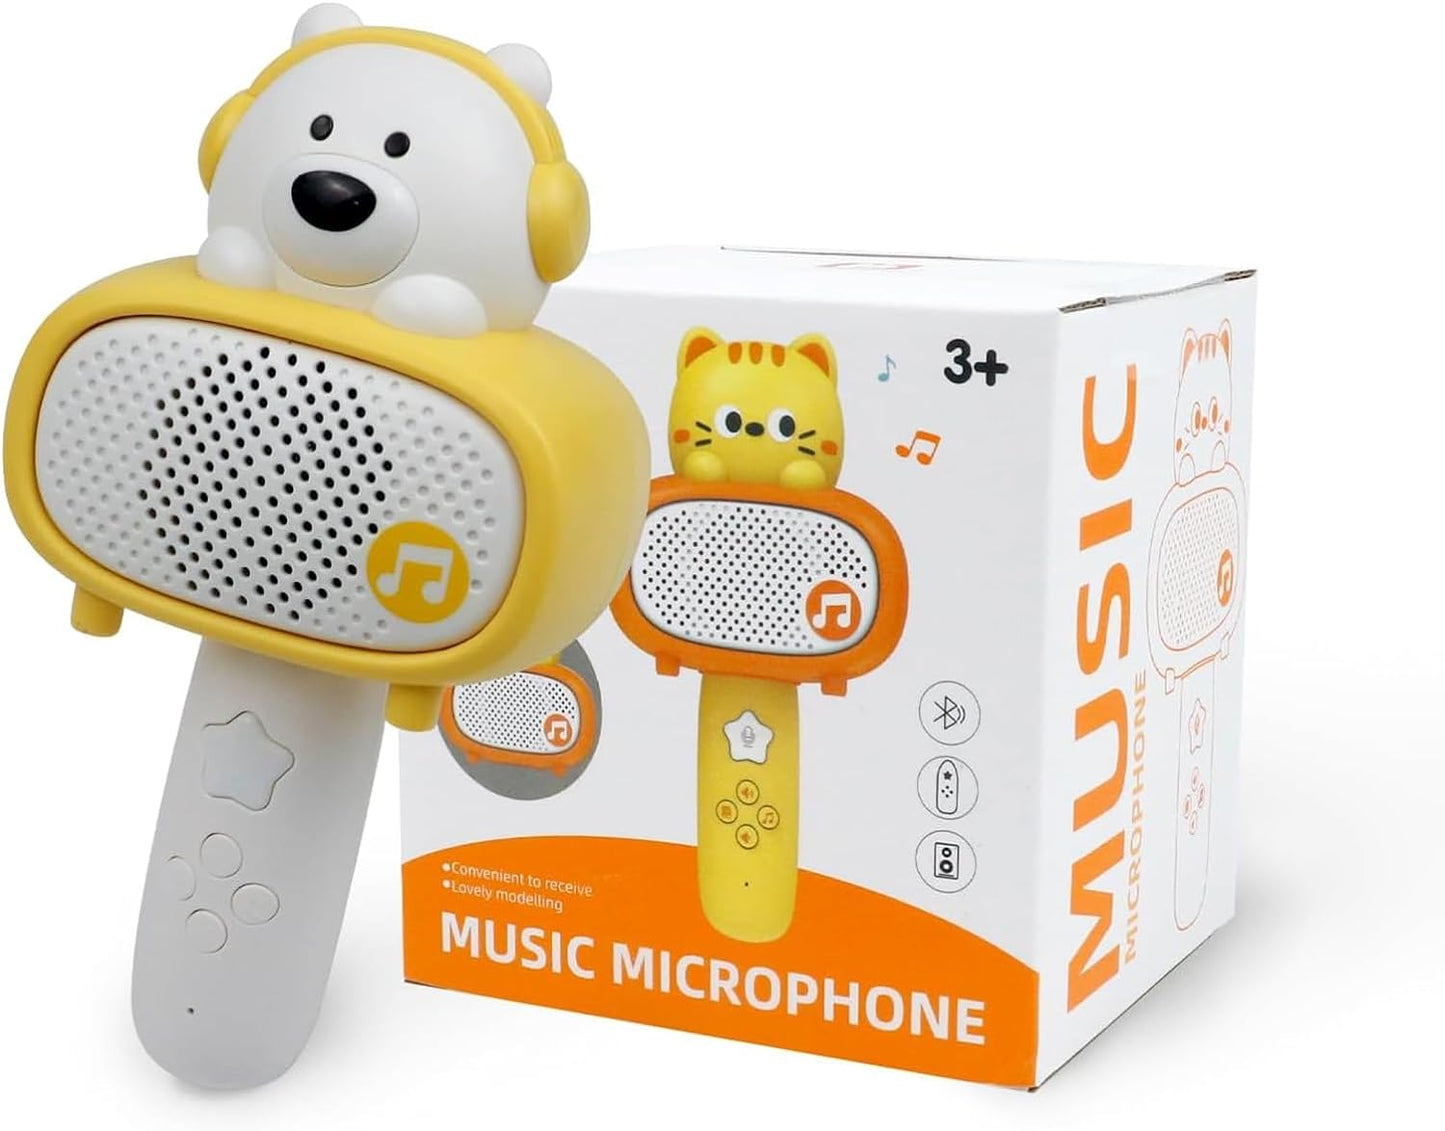 Microphone Bluetooth Speakers Wireless Karaoke Machine Kids Toys